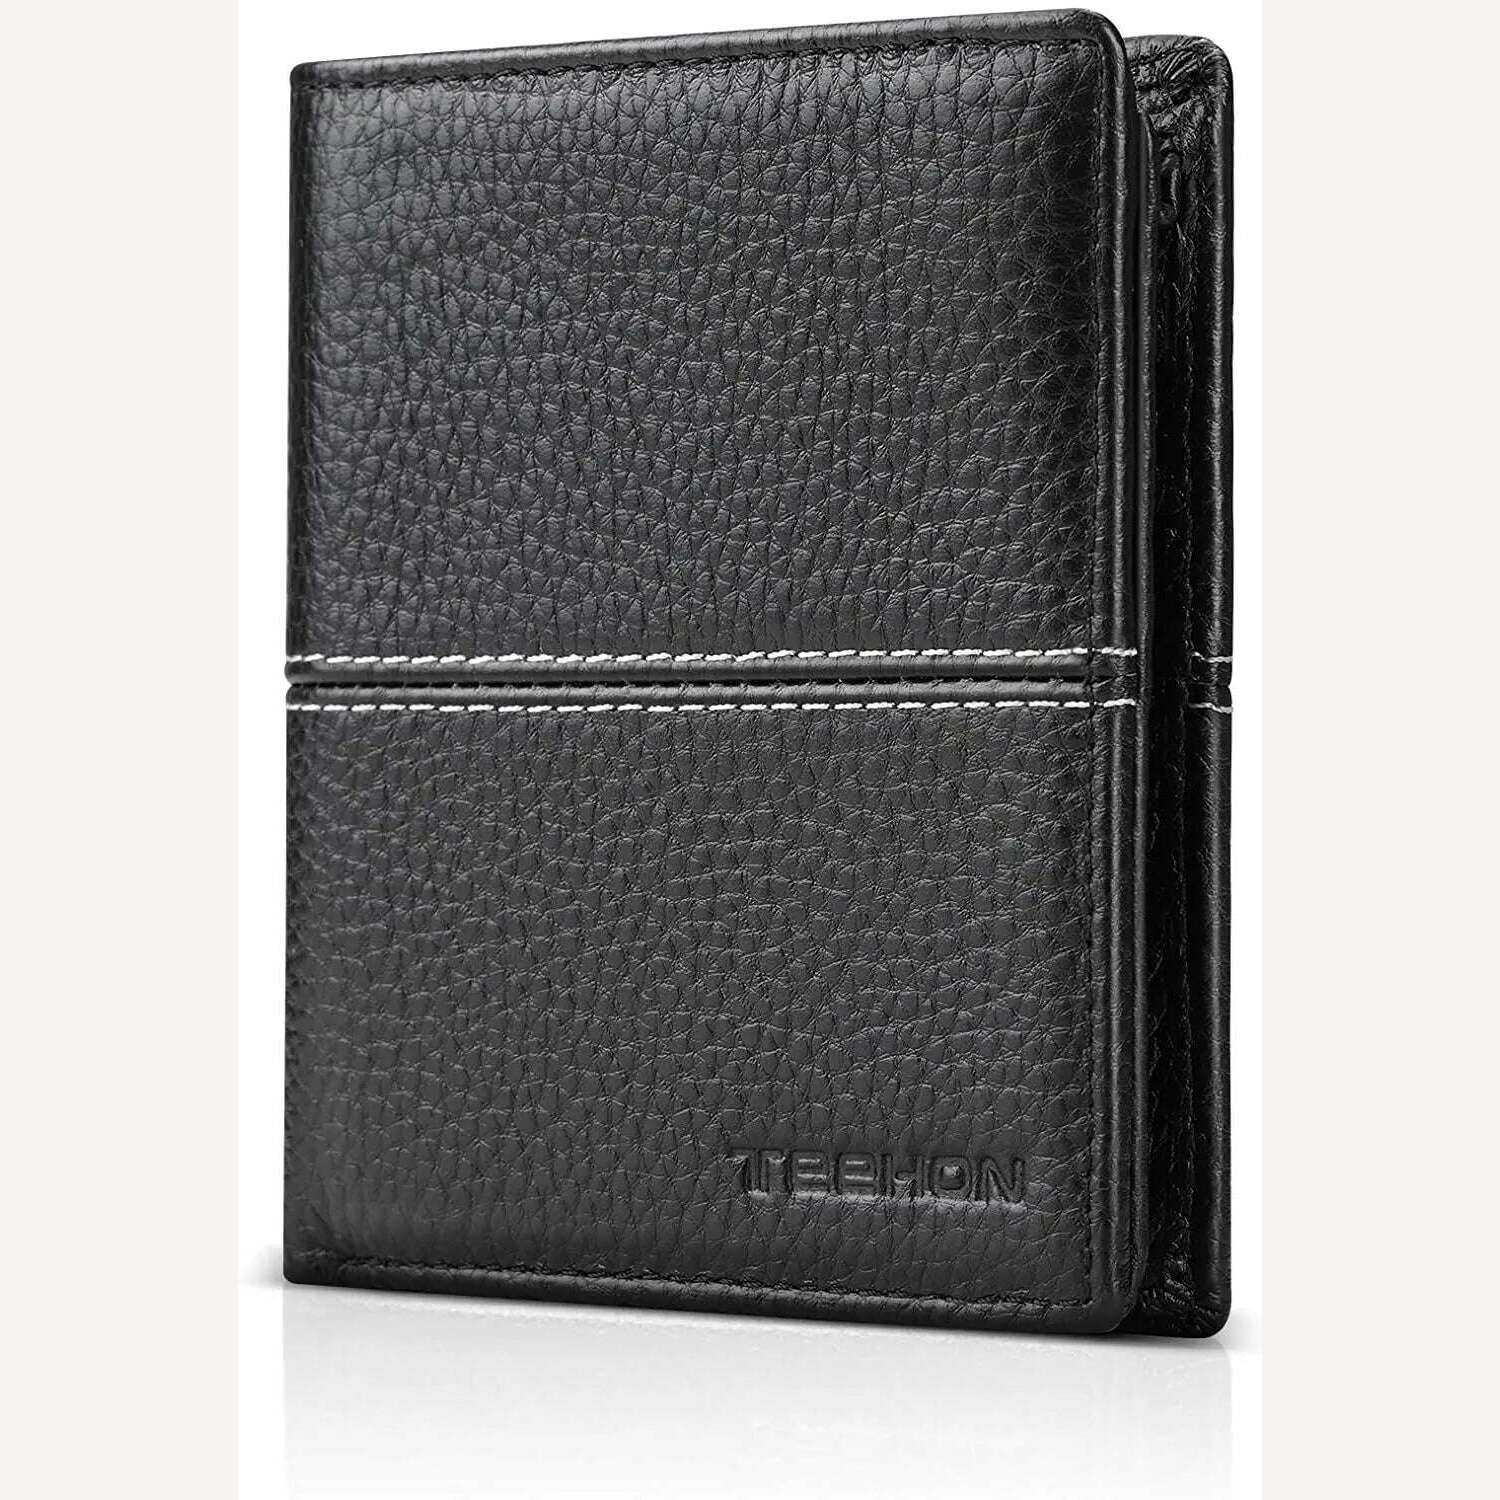 KIMLUD, TEEHON Casual Soft Genuine Leather Wallet Men RFID Black Purse Coin Card Holder, KIMLUD Womens Clothes